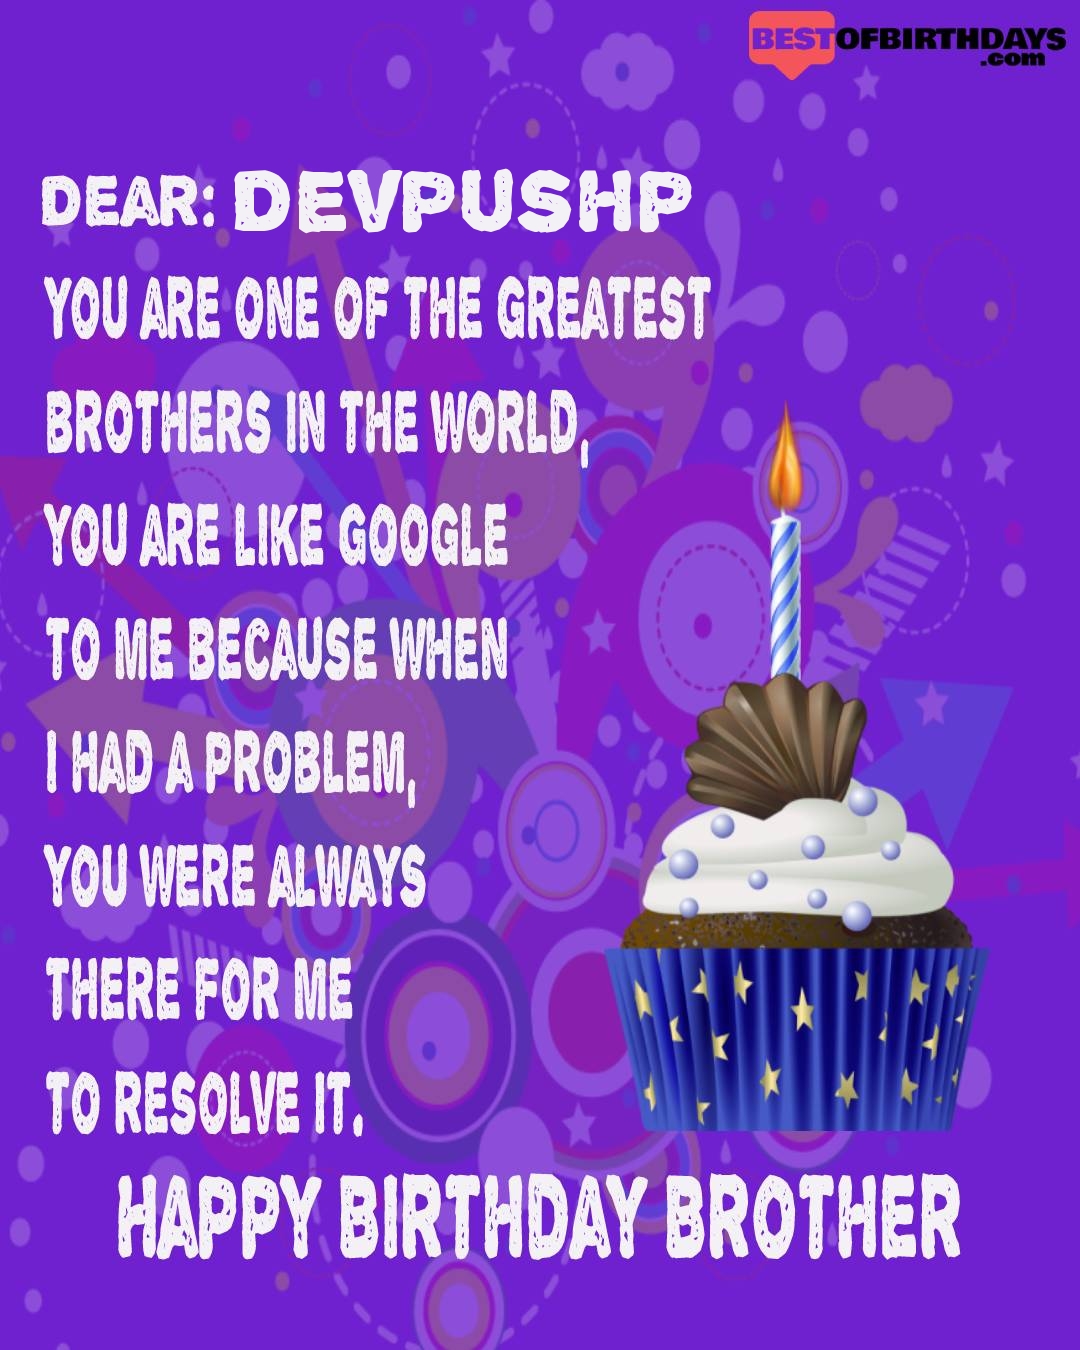 Happy birthday devpushp bhai brother bro